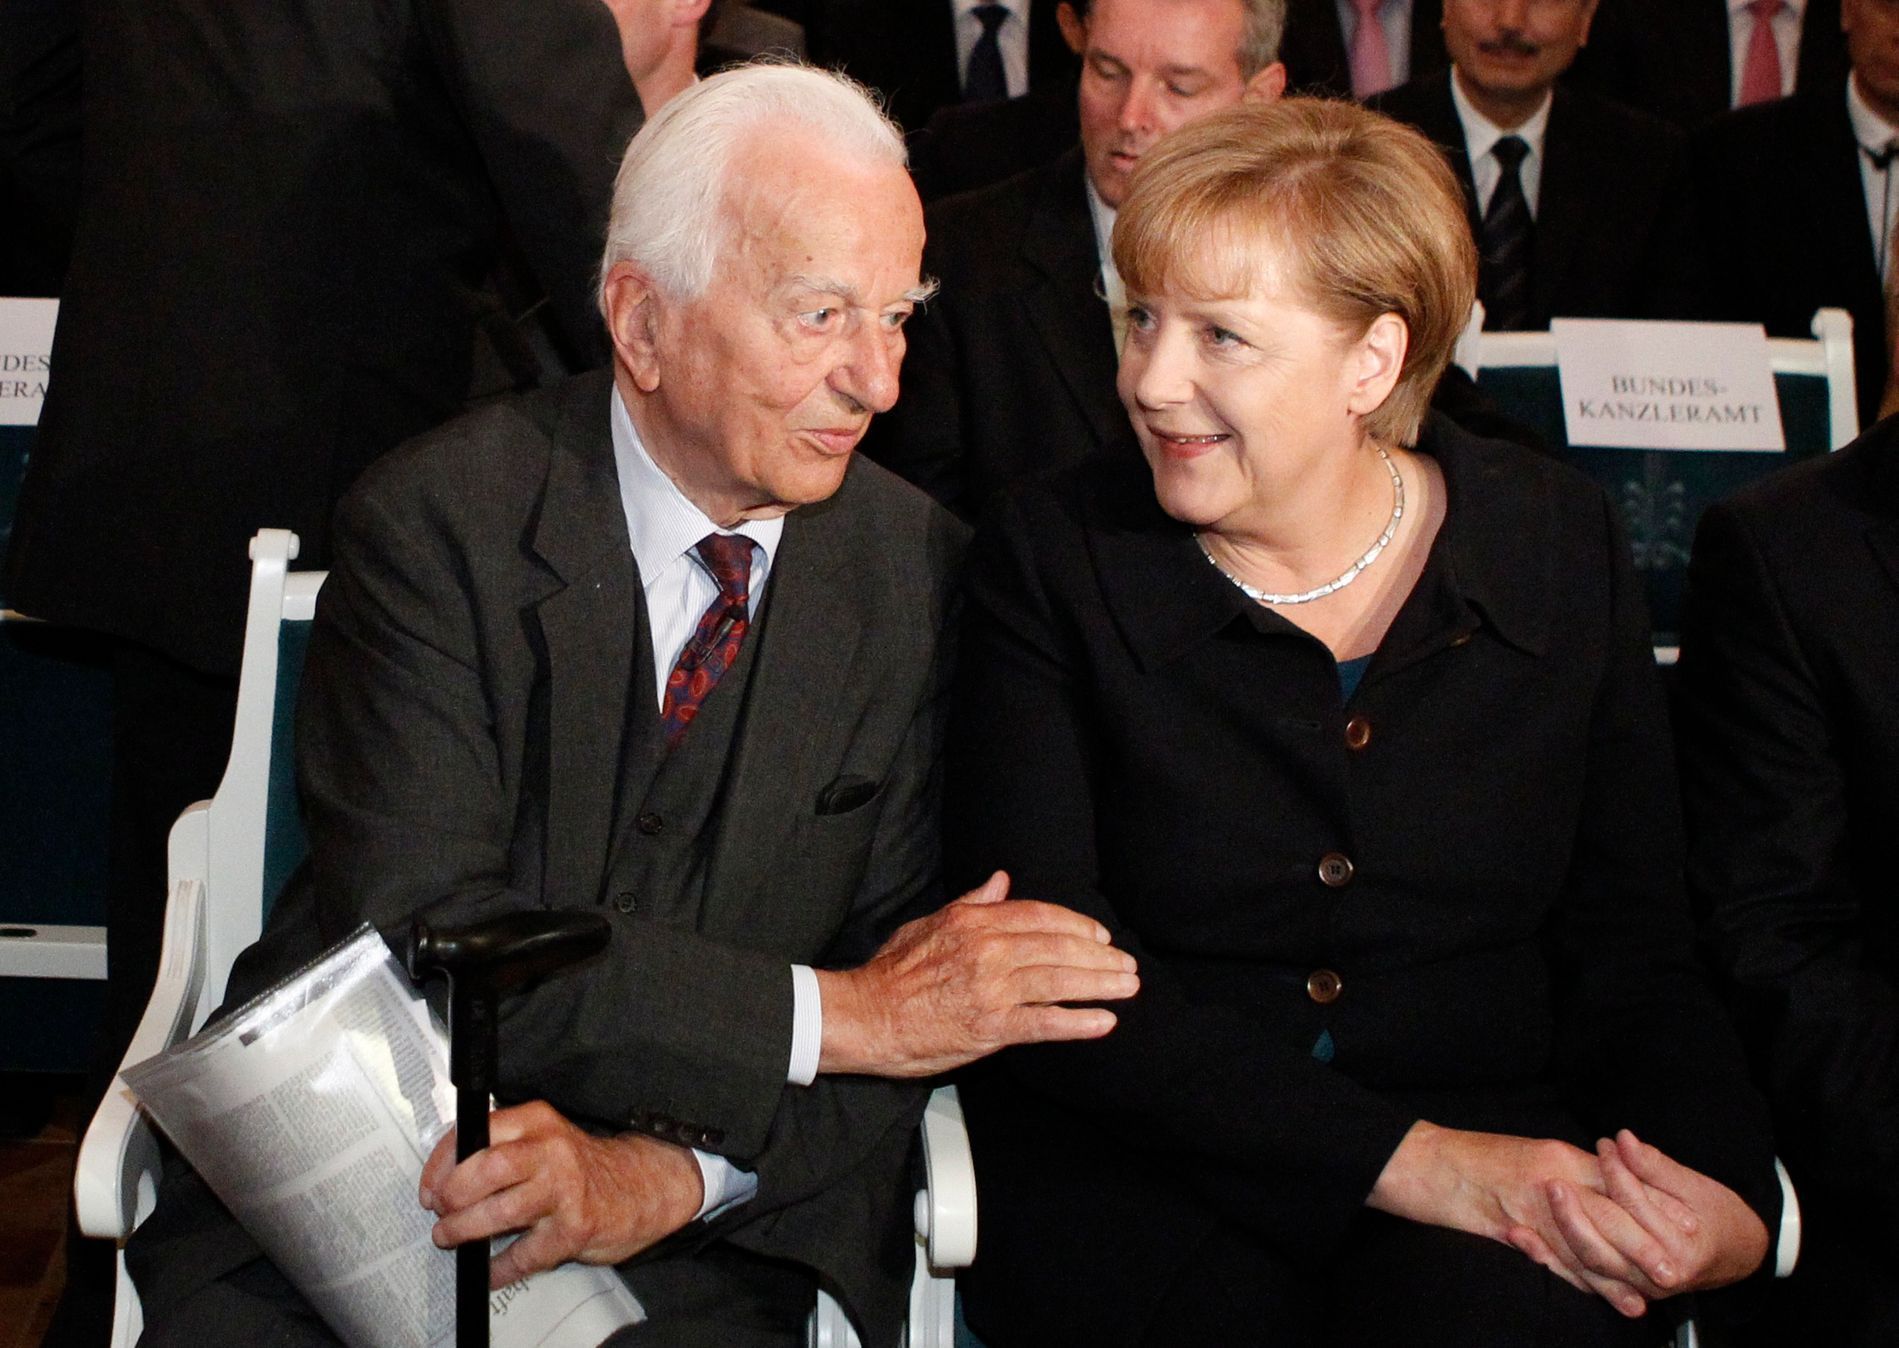 File photo of German Chancellor Merkel talking with former President von Weizsaecker during ceremony in Berlin